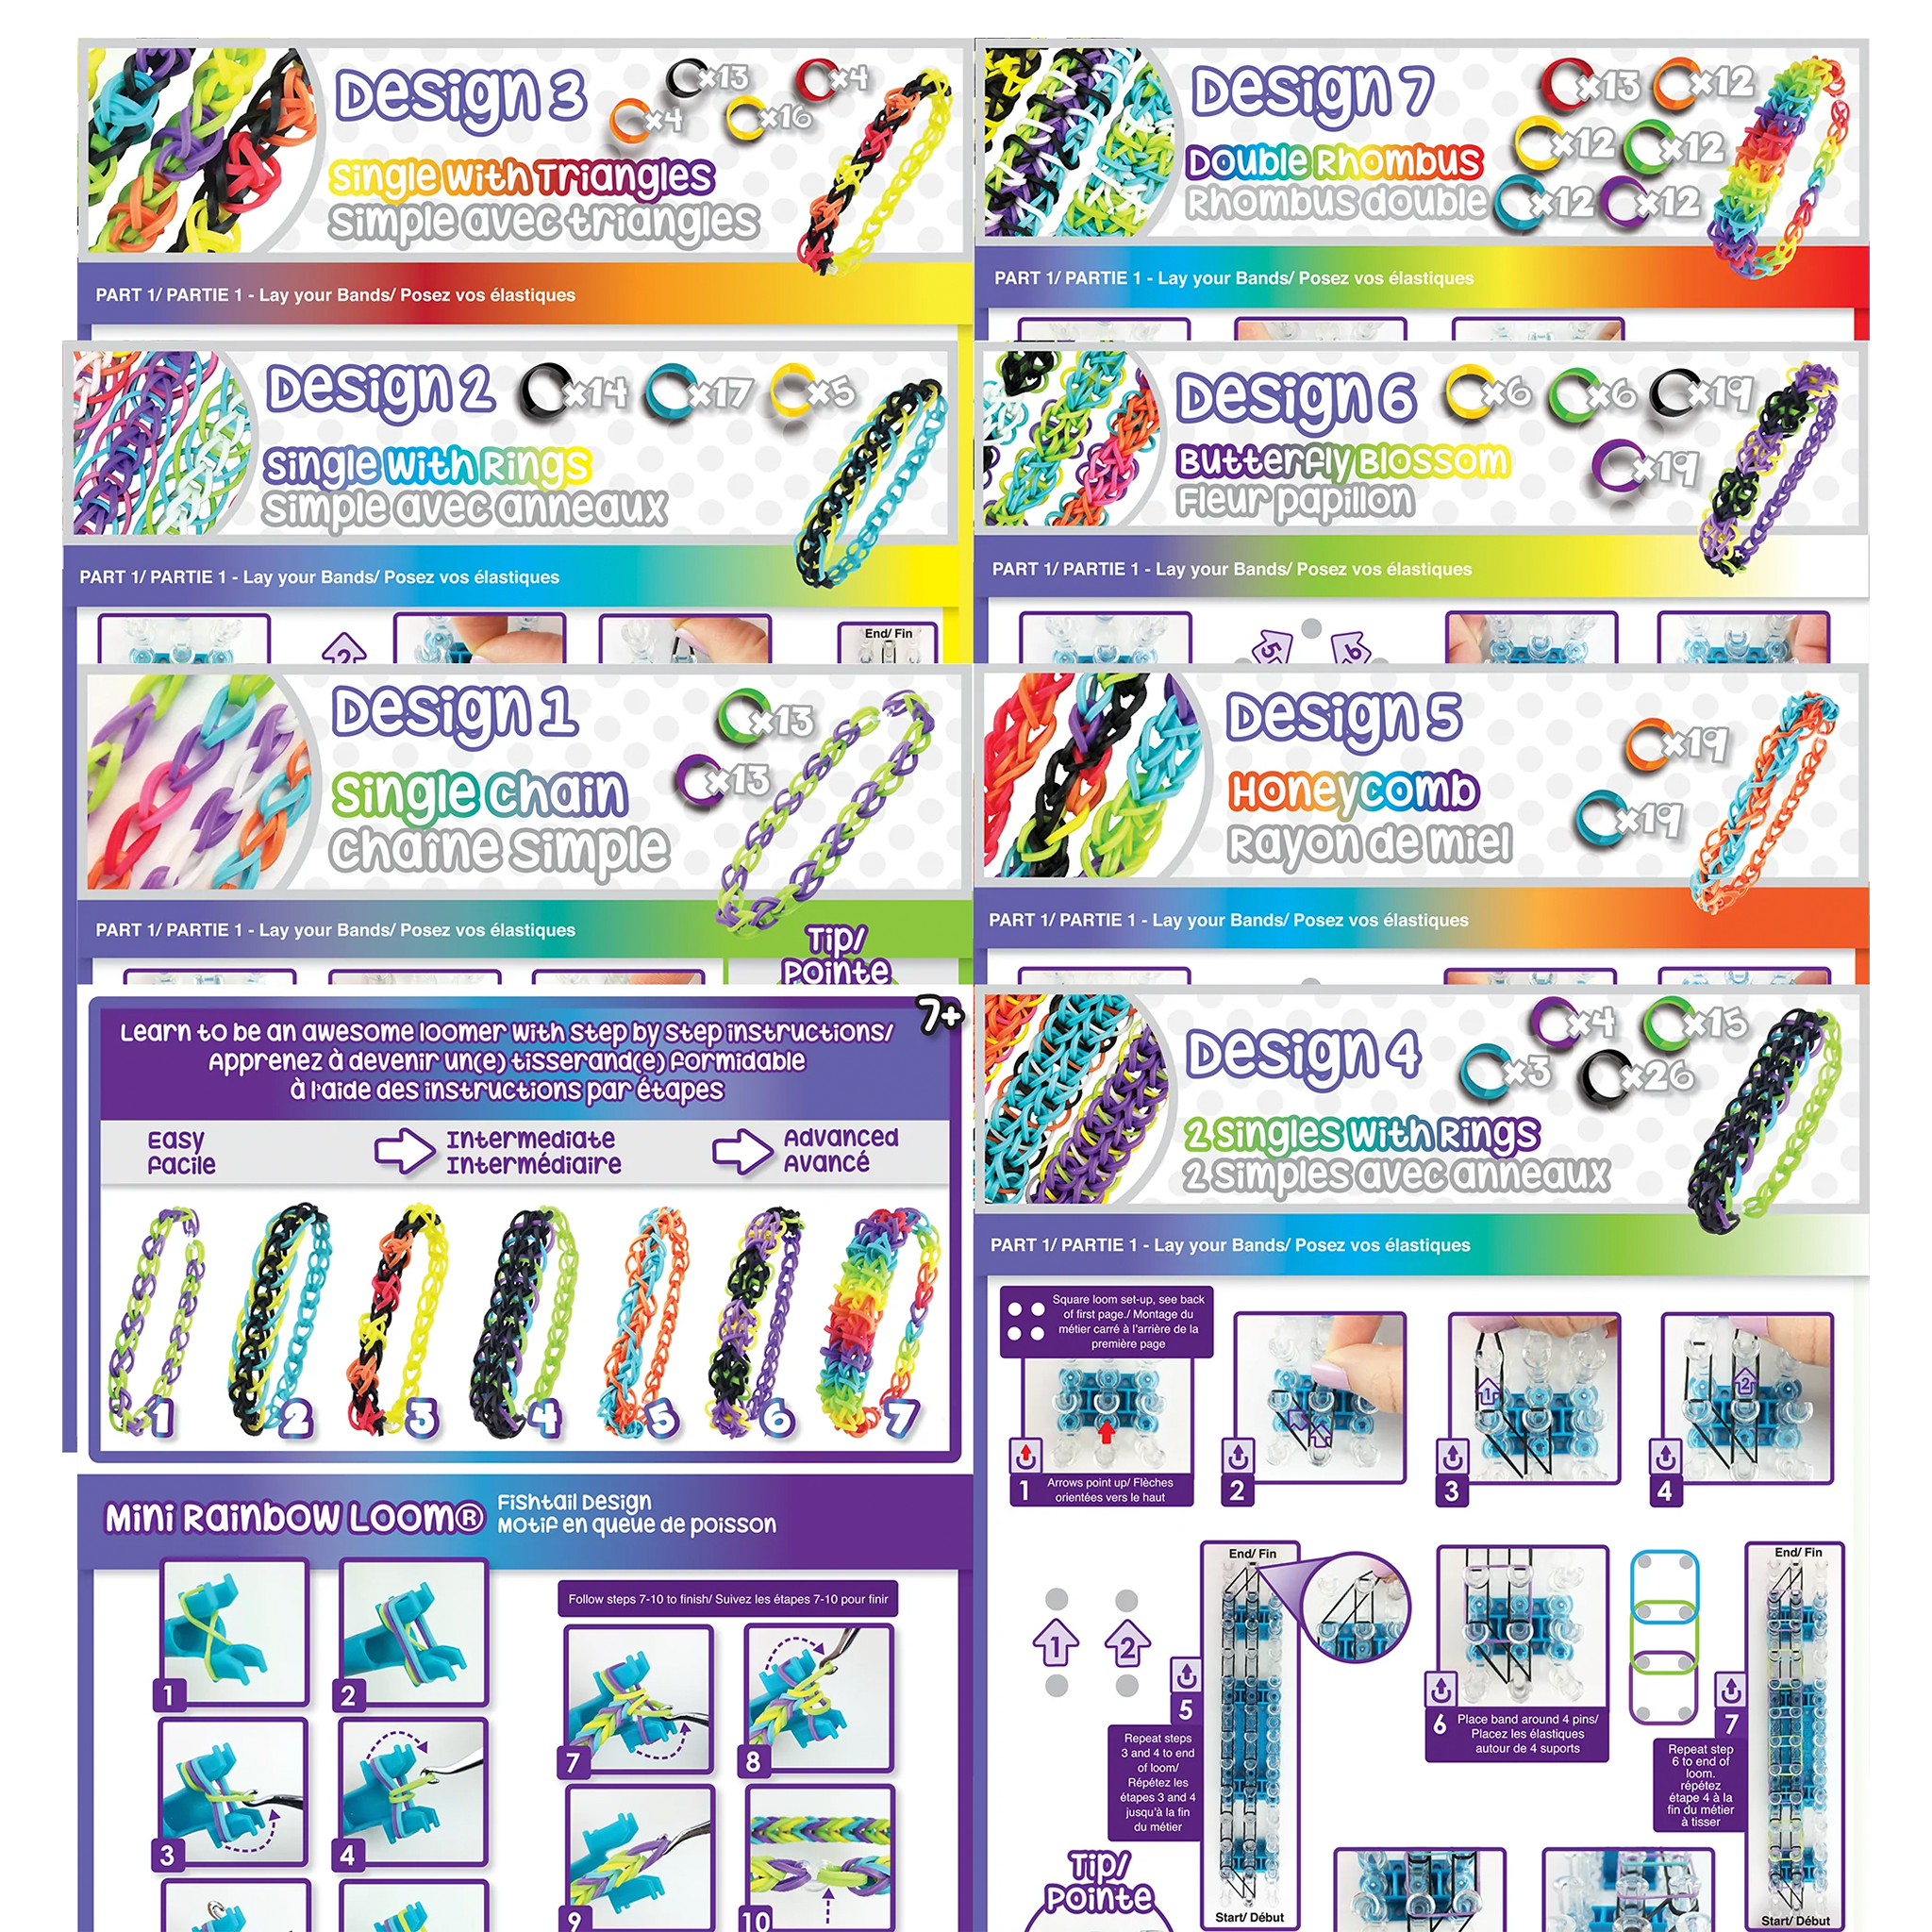 Rainbow Loom Bracelet Making Kit Crafts Kids Hobby 600+ Latex Free Rubber  Band 670541160183